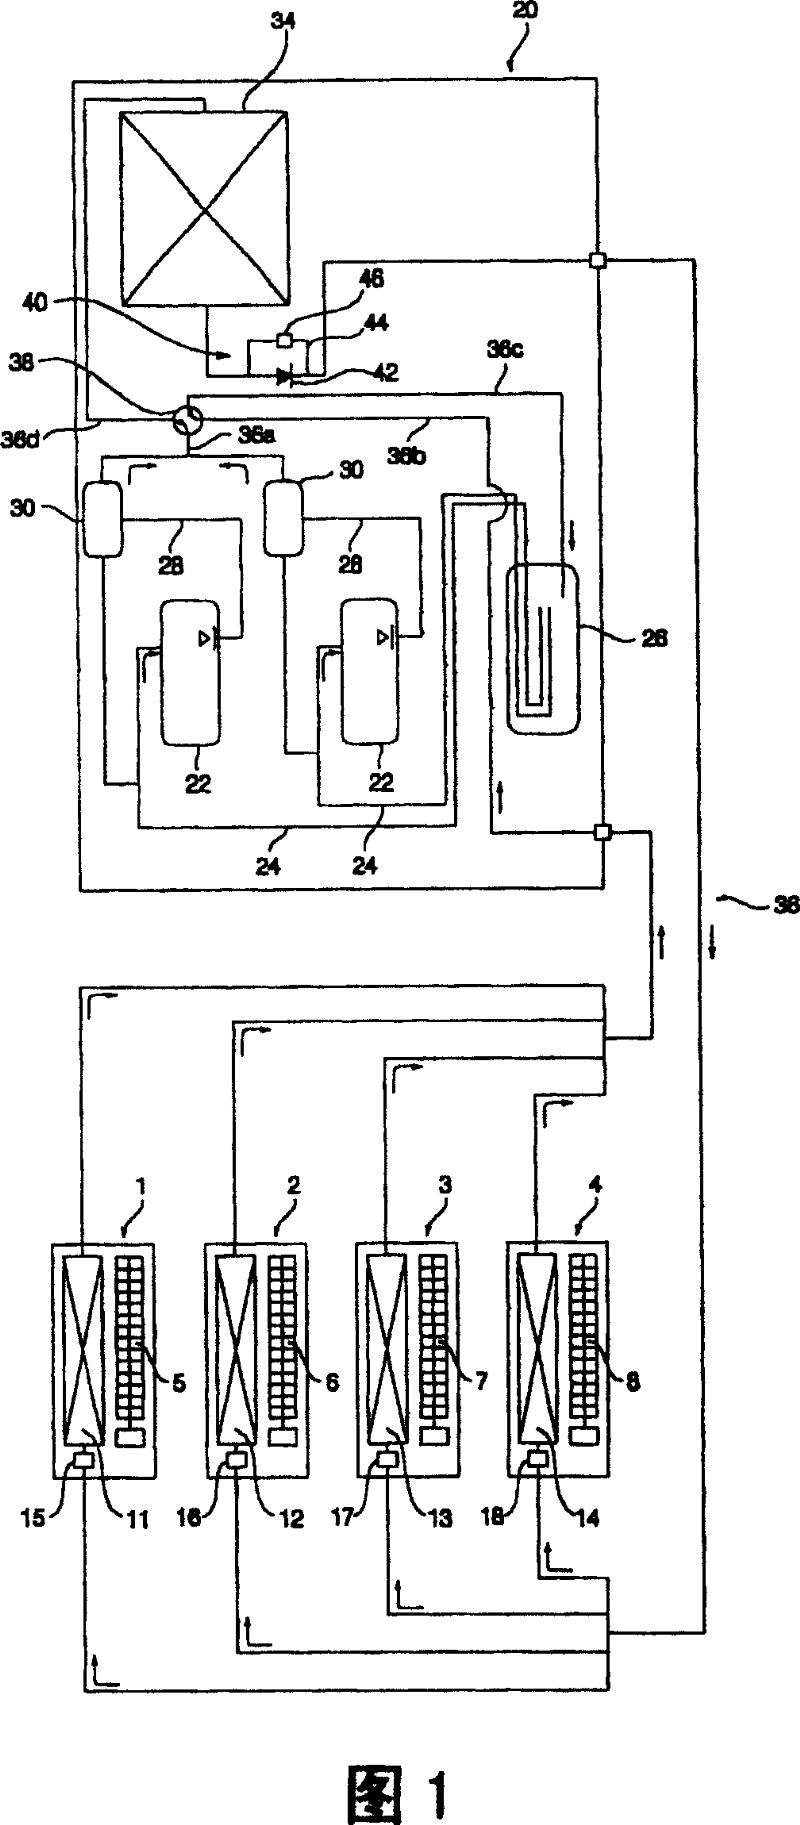 Control method of complex heat pump